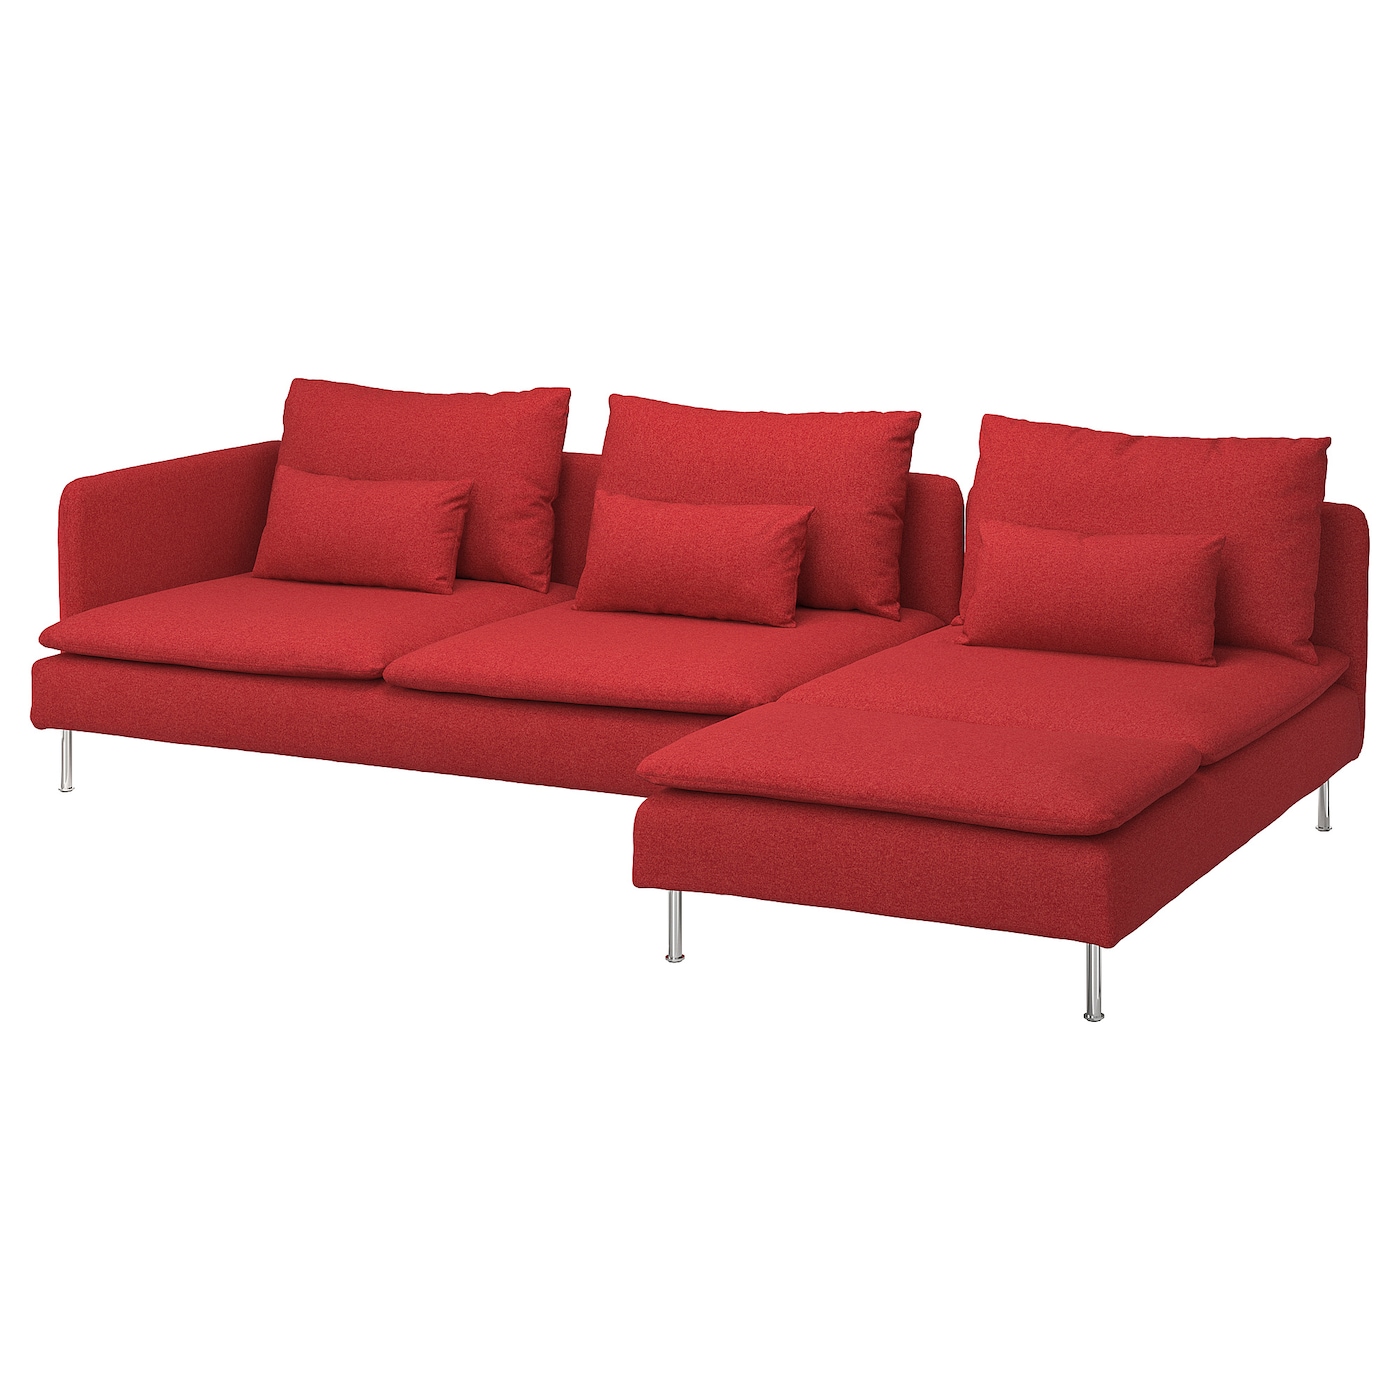 СЁДЕРХАМН 4-местный диван + диван, створка Тонеруд/красный SODERHAMN IKEA диван раскладной конфетти